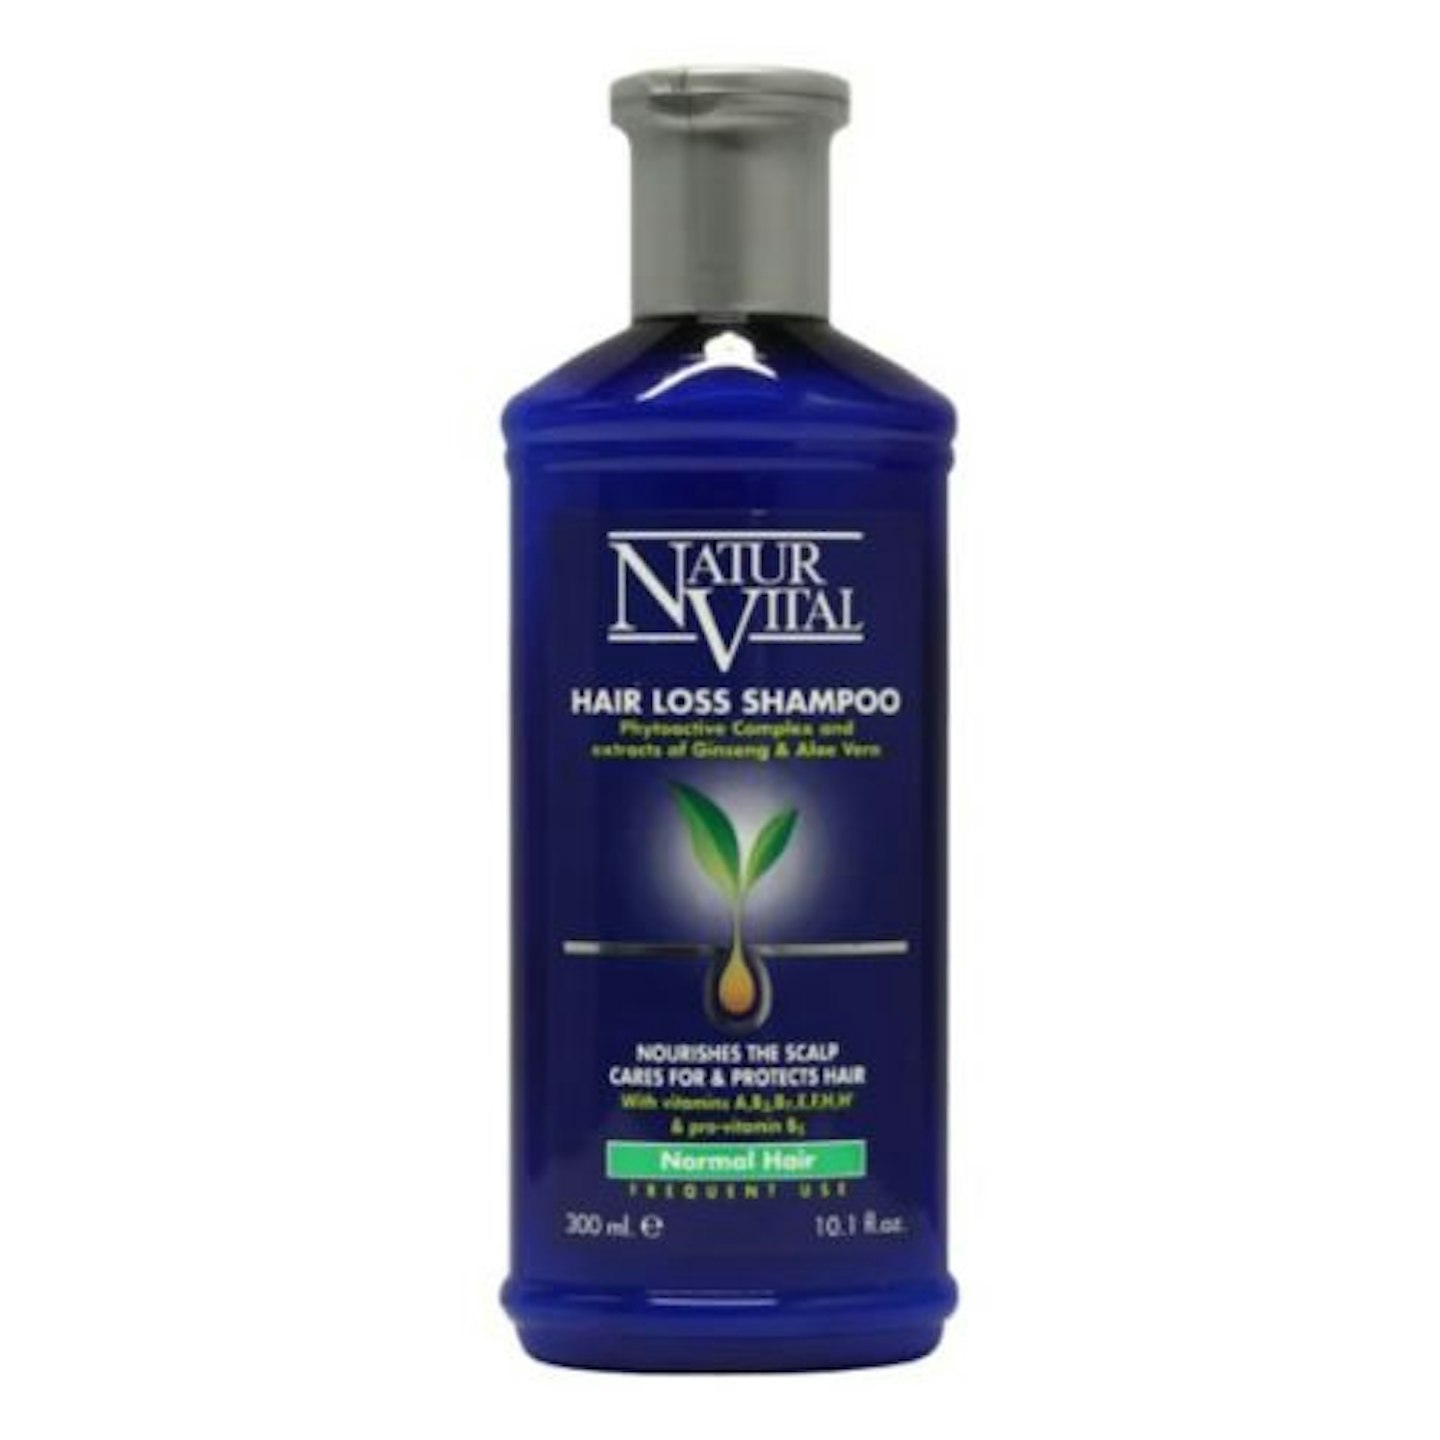 Natur Vital Hair Loss Shampoo